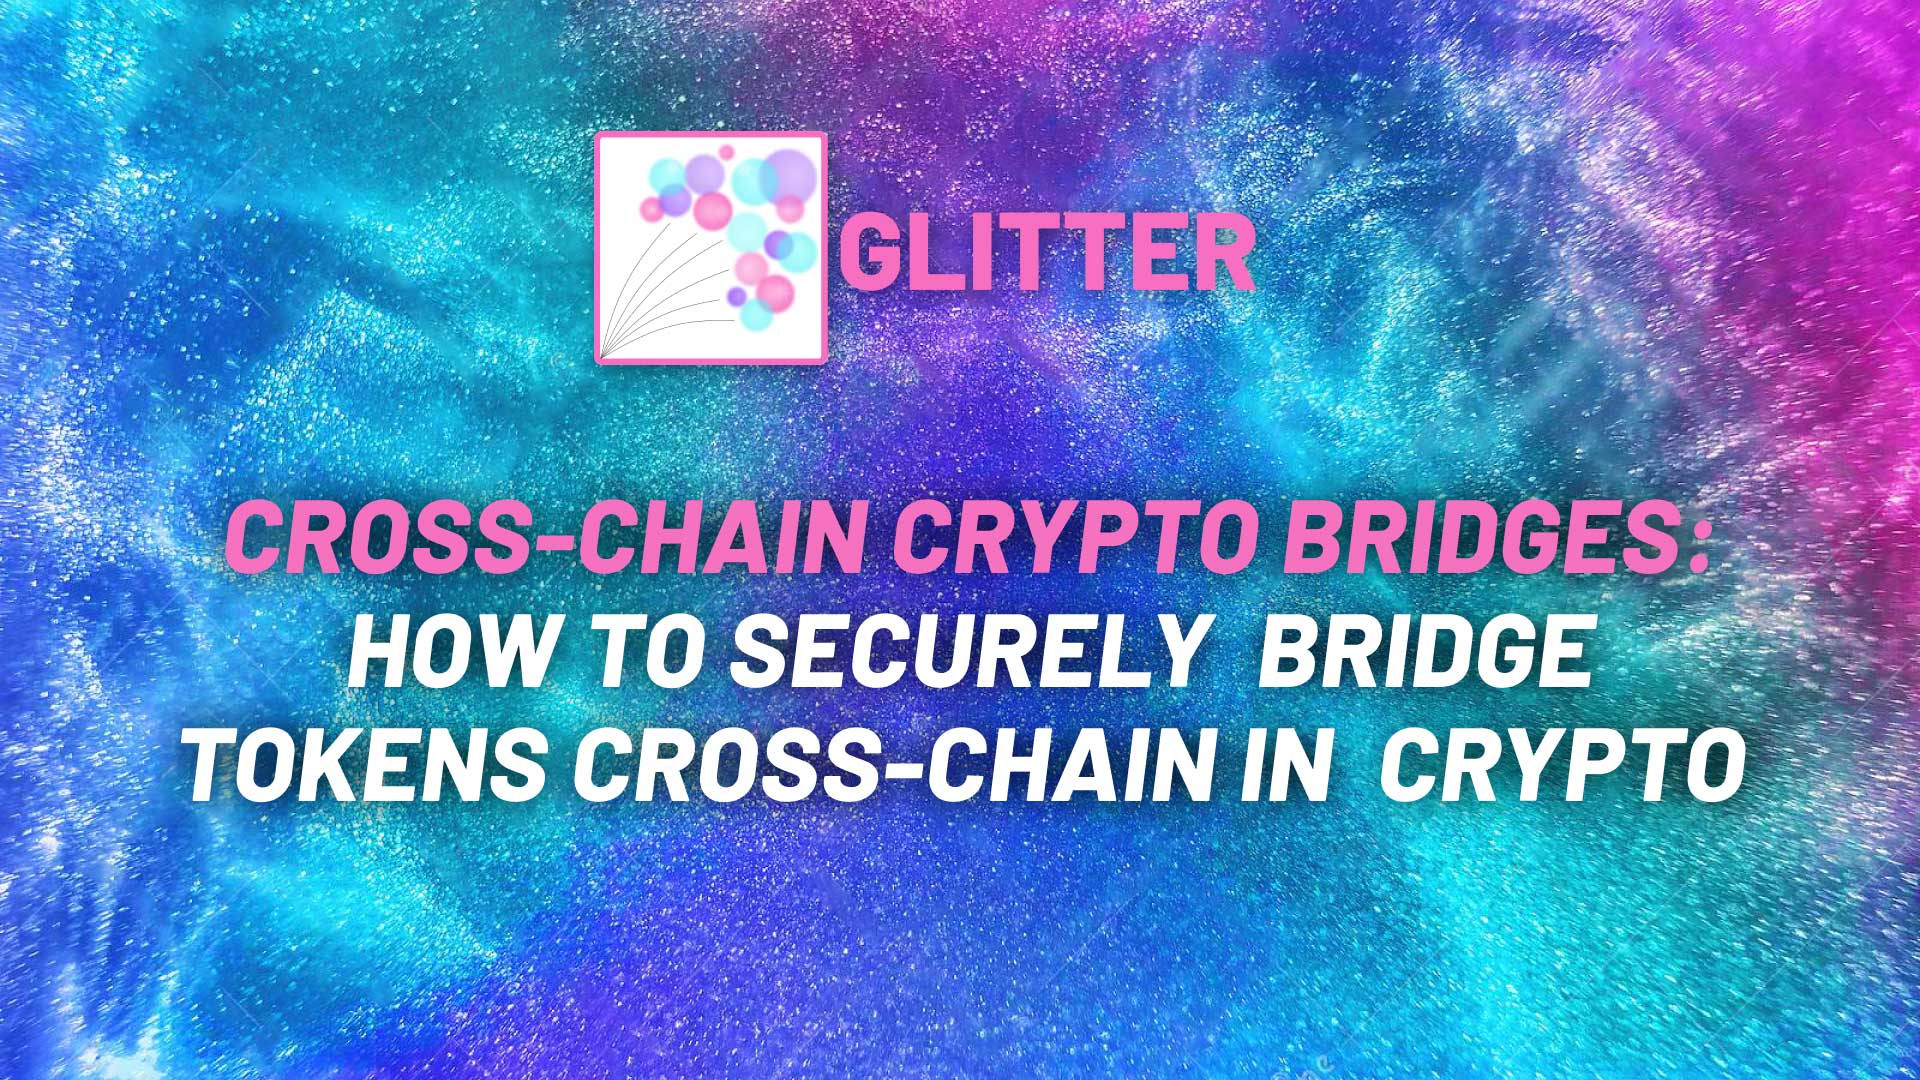 Cross-chain crypto bridges: How to securely  bridge tokens cross-chain in crypto image